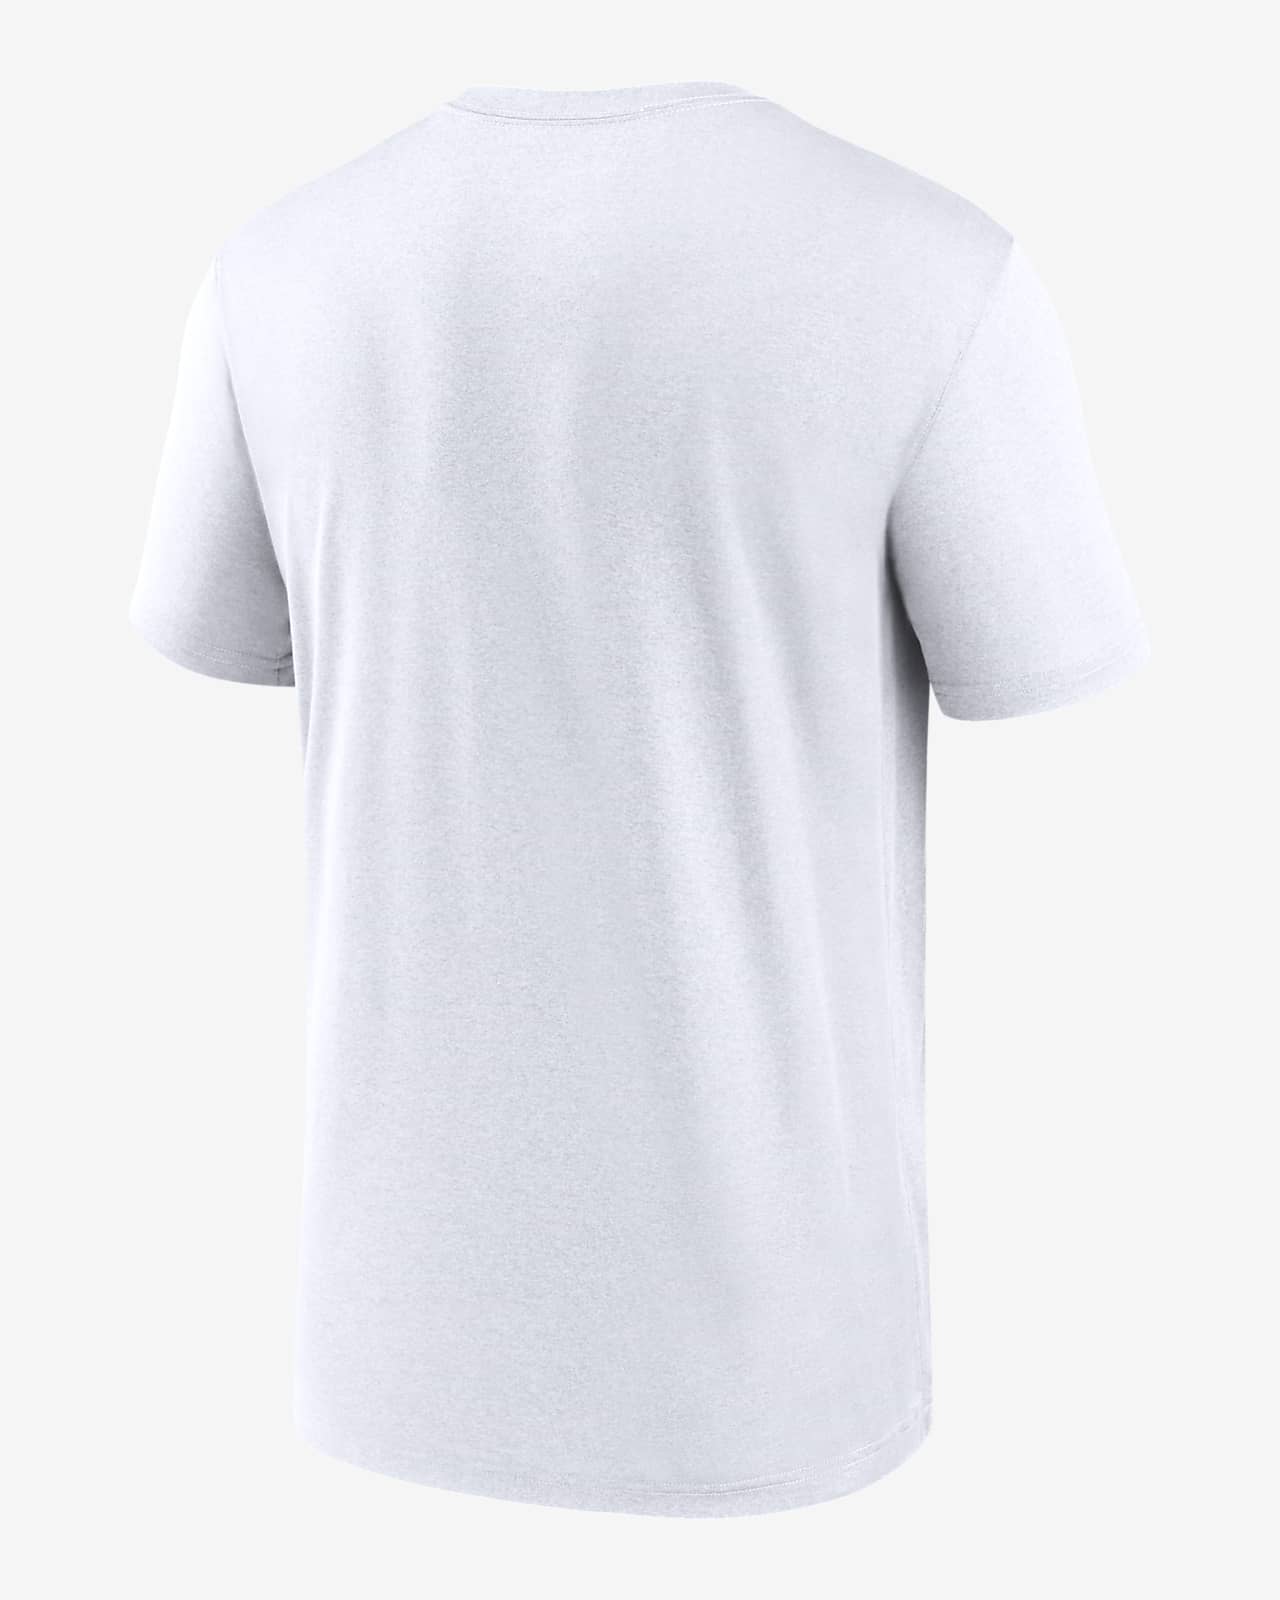 white sox dri fit shirt